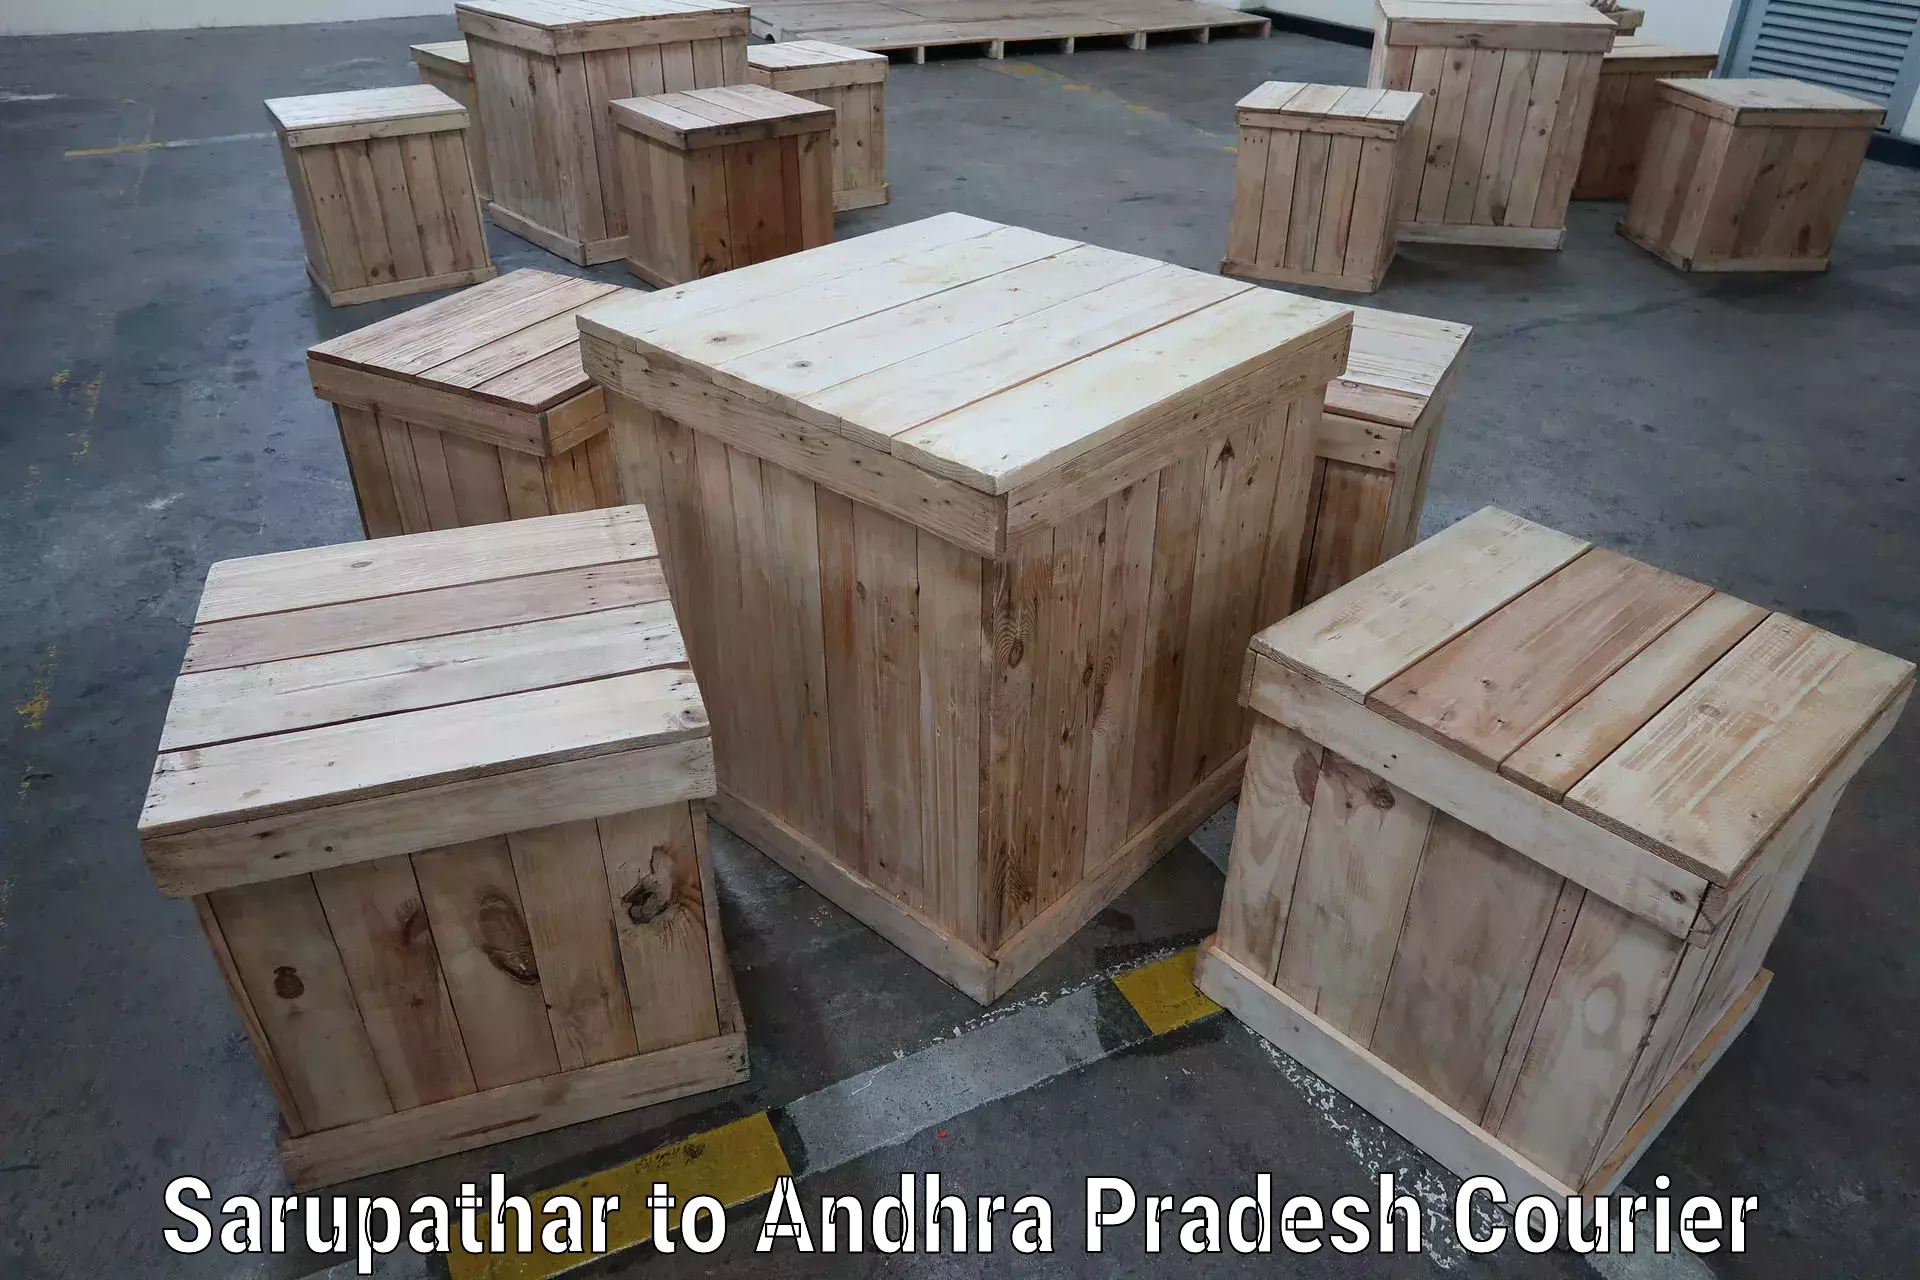 Courier service innovation Sarupathar to Andhra Pradesh